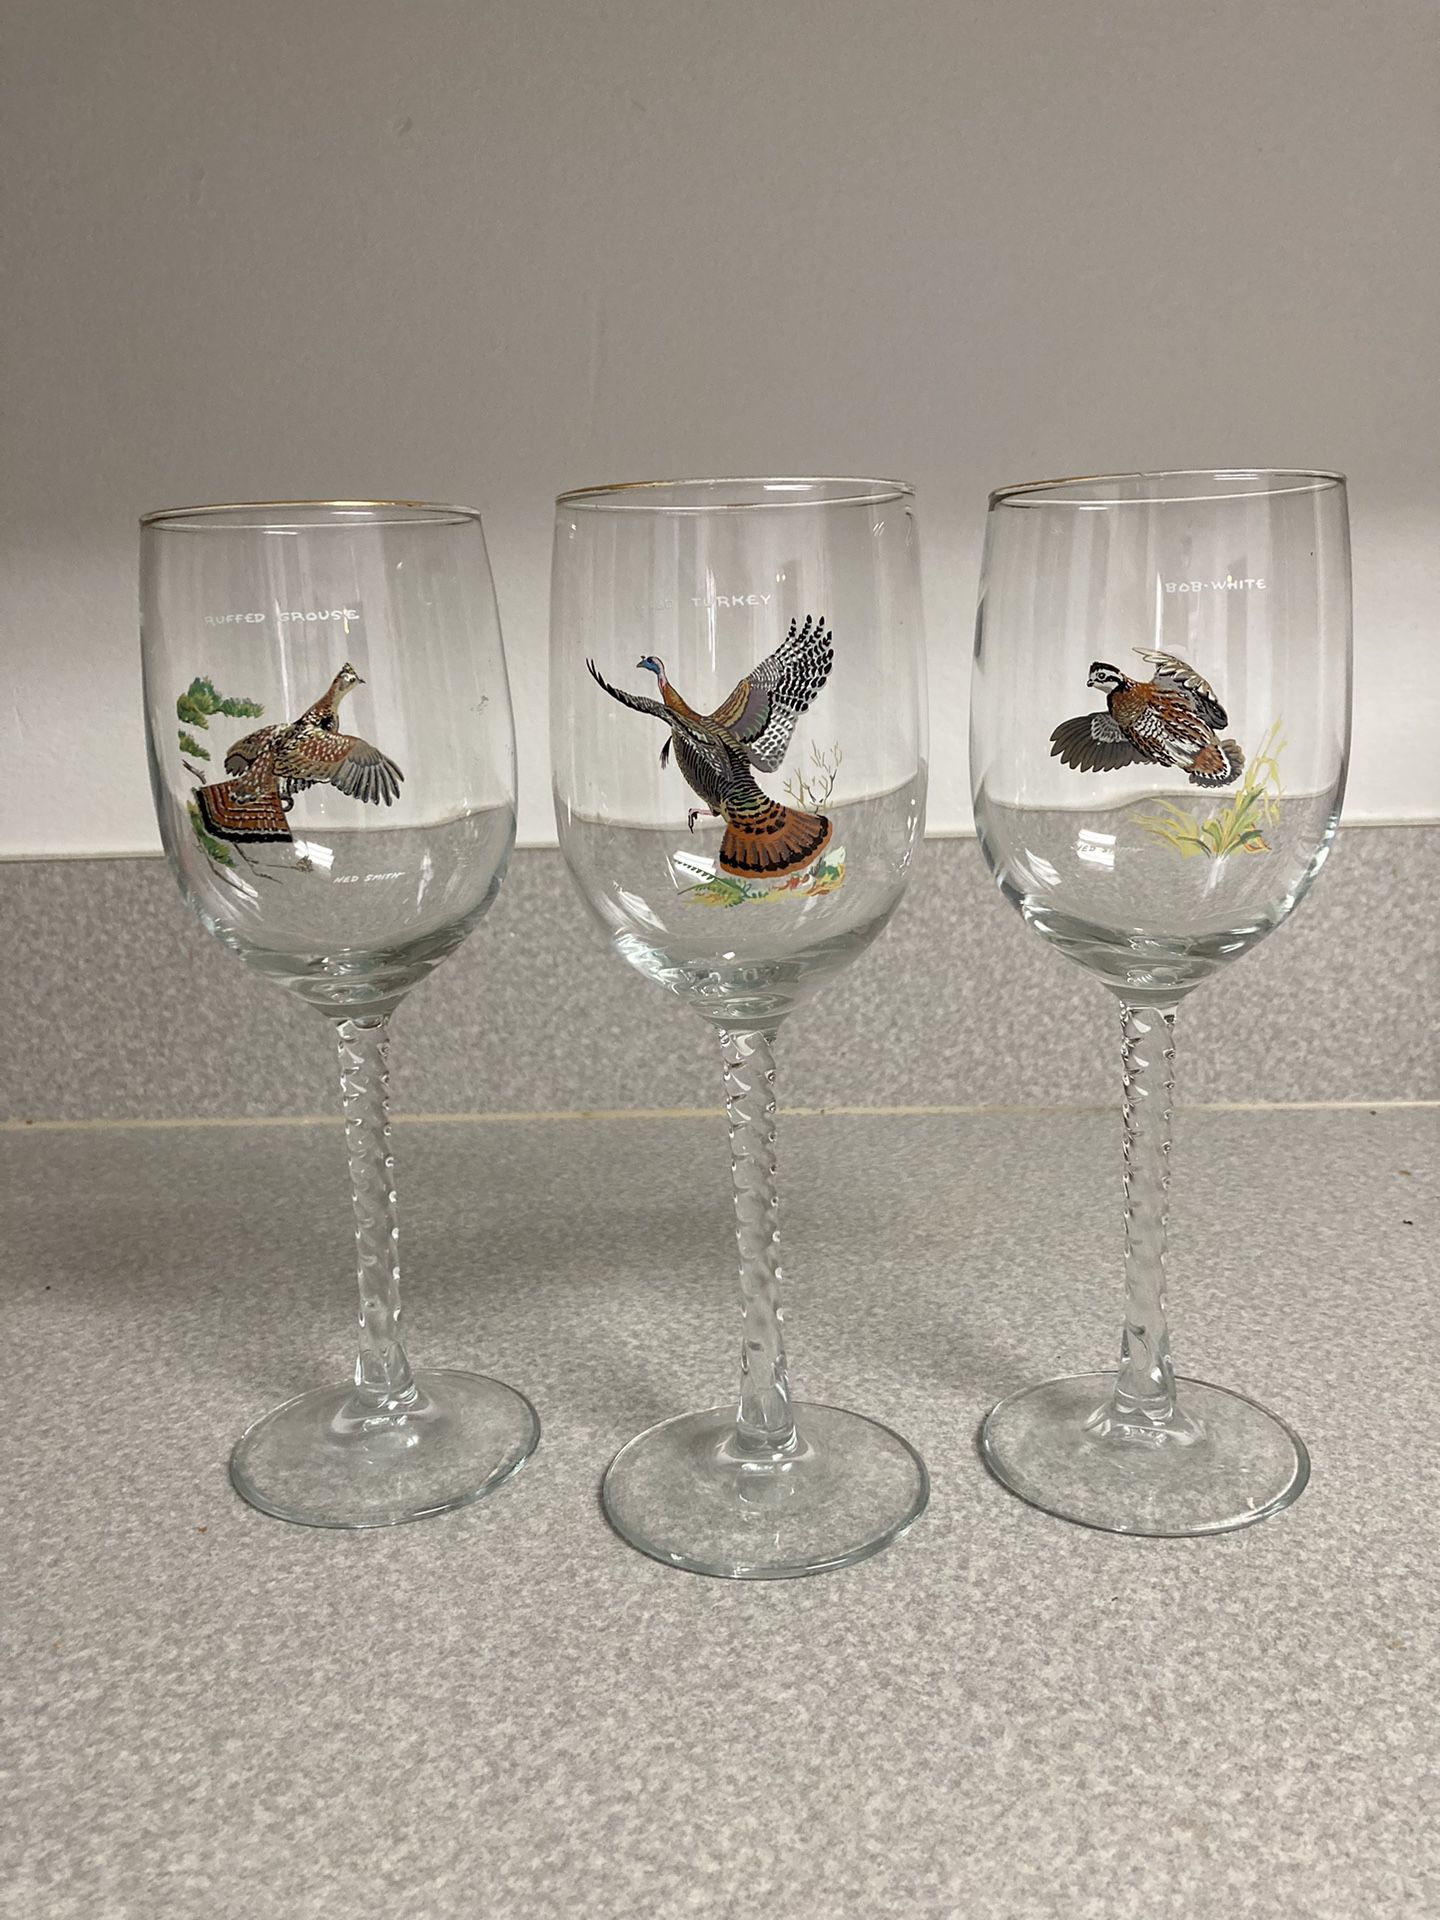 Set of three Ned Smith, wine glasses